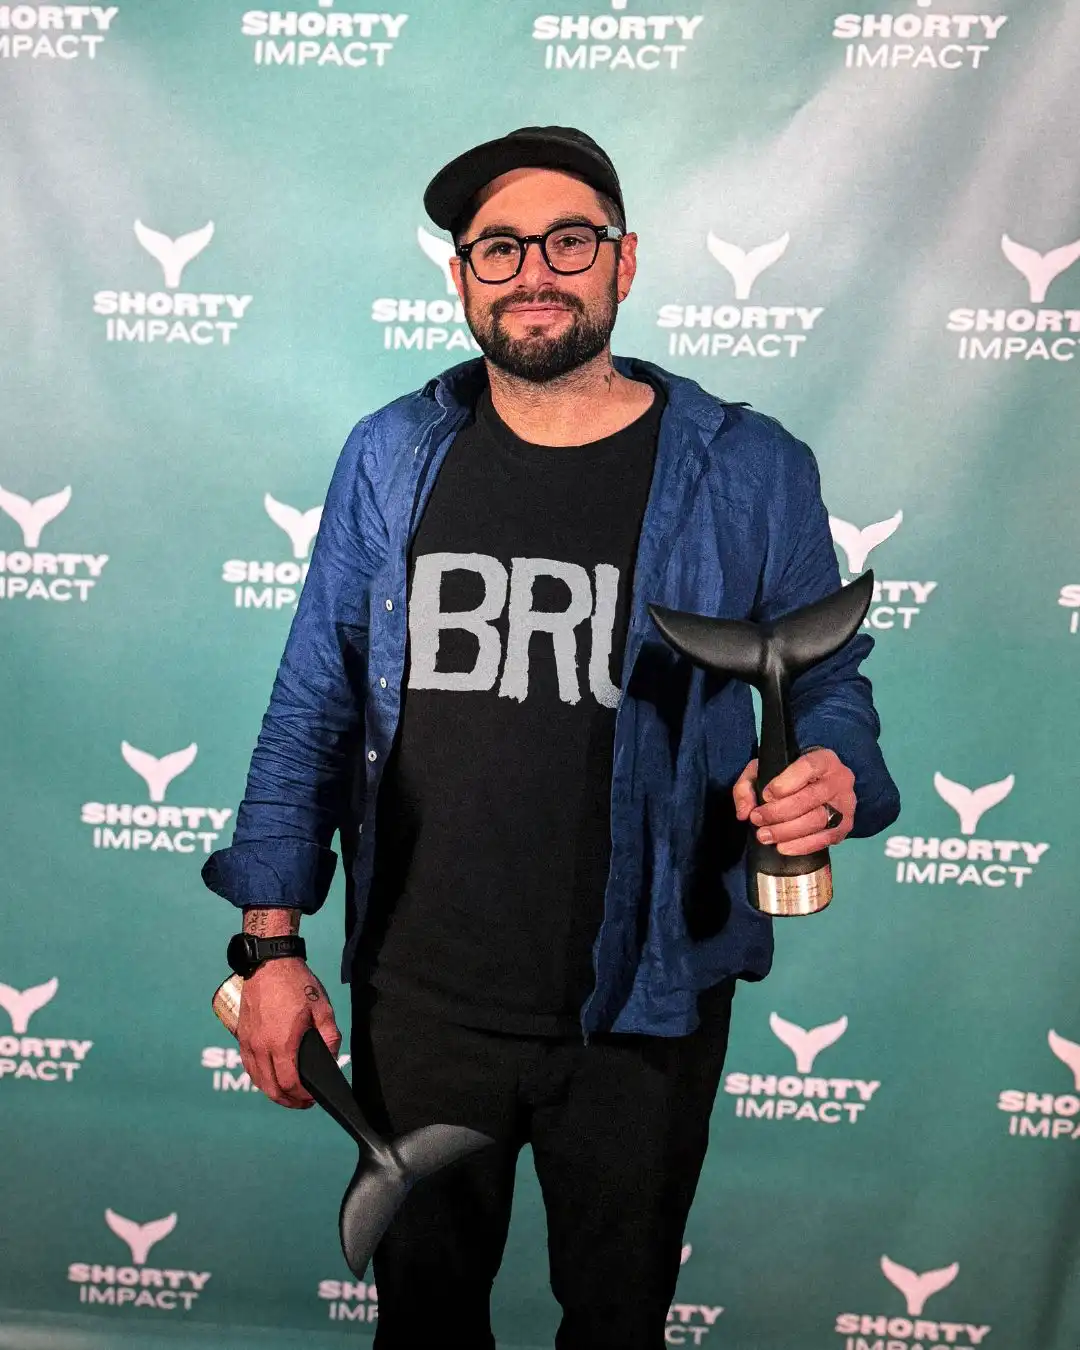 SA filmmaker wins twice at Shorty Impact Awards in LA